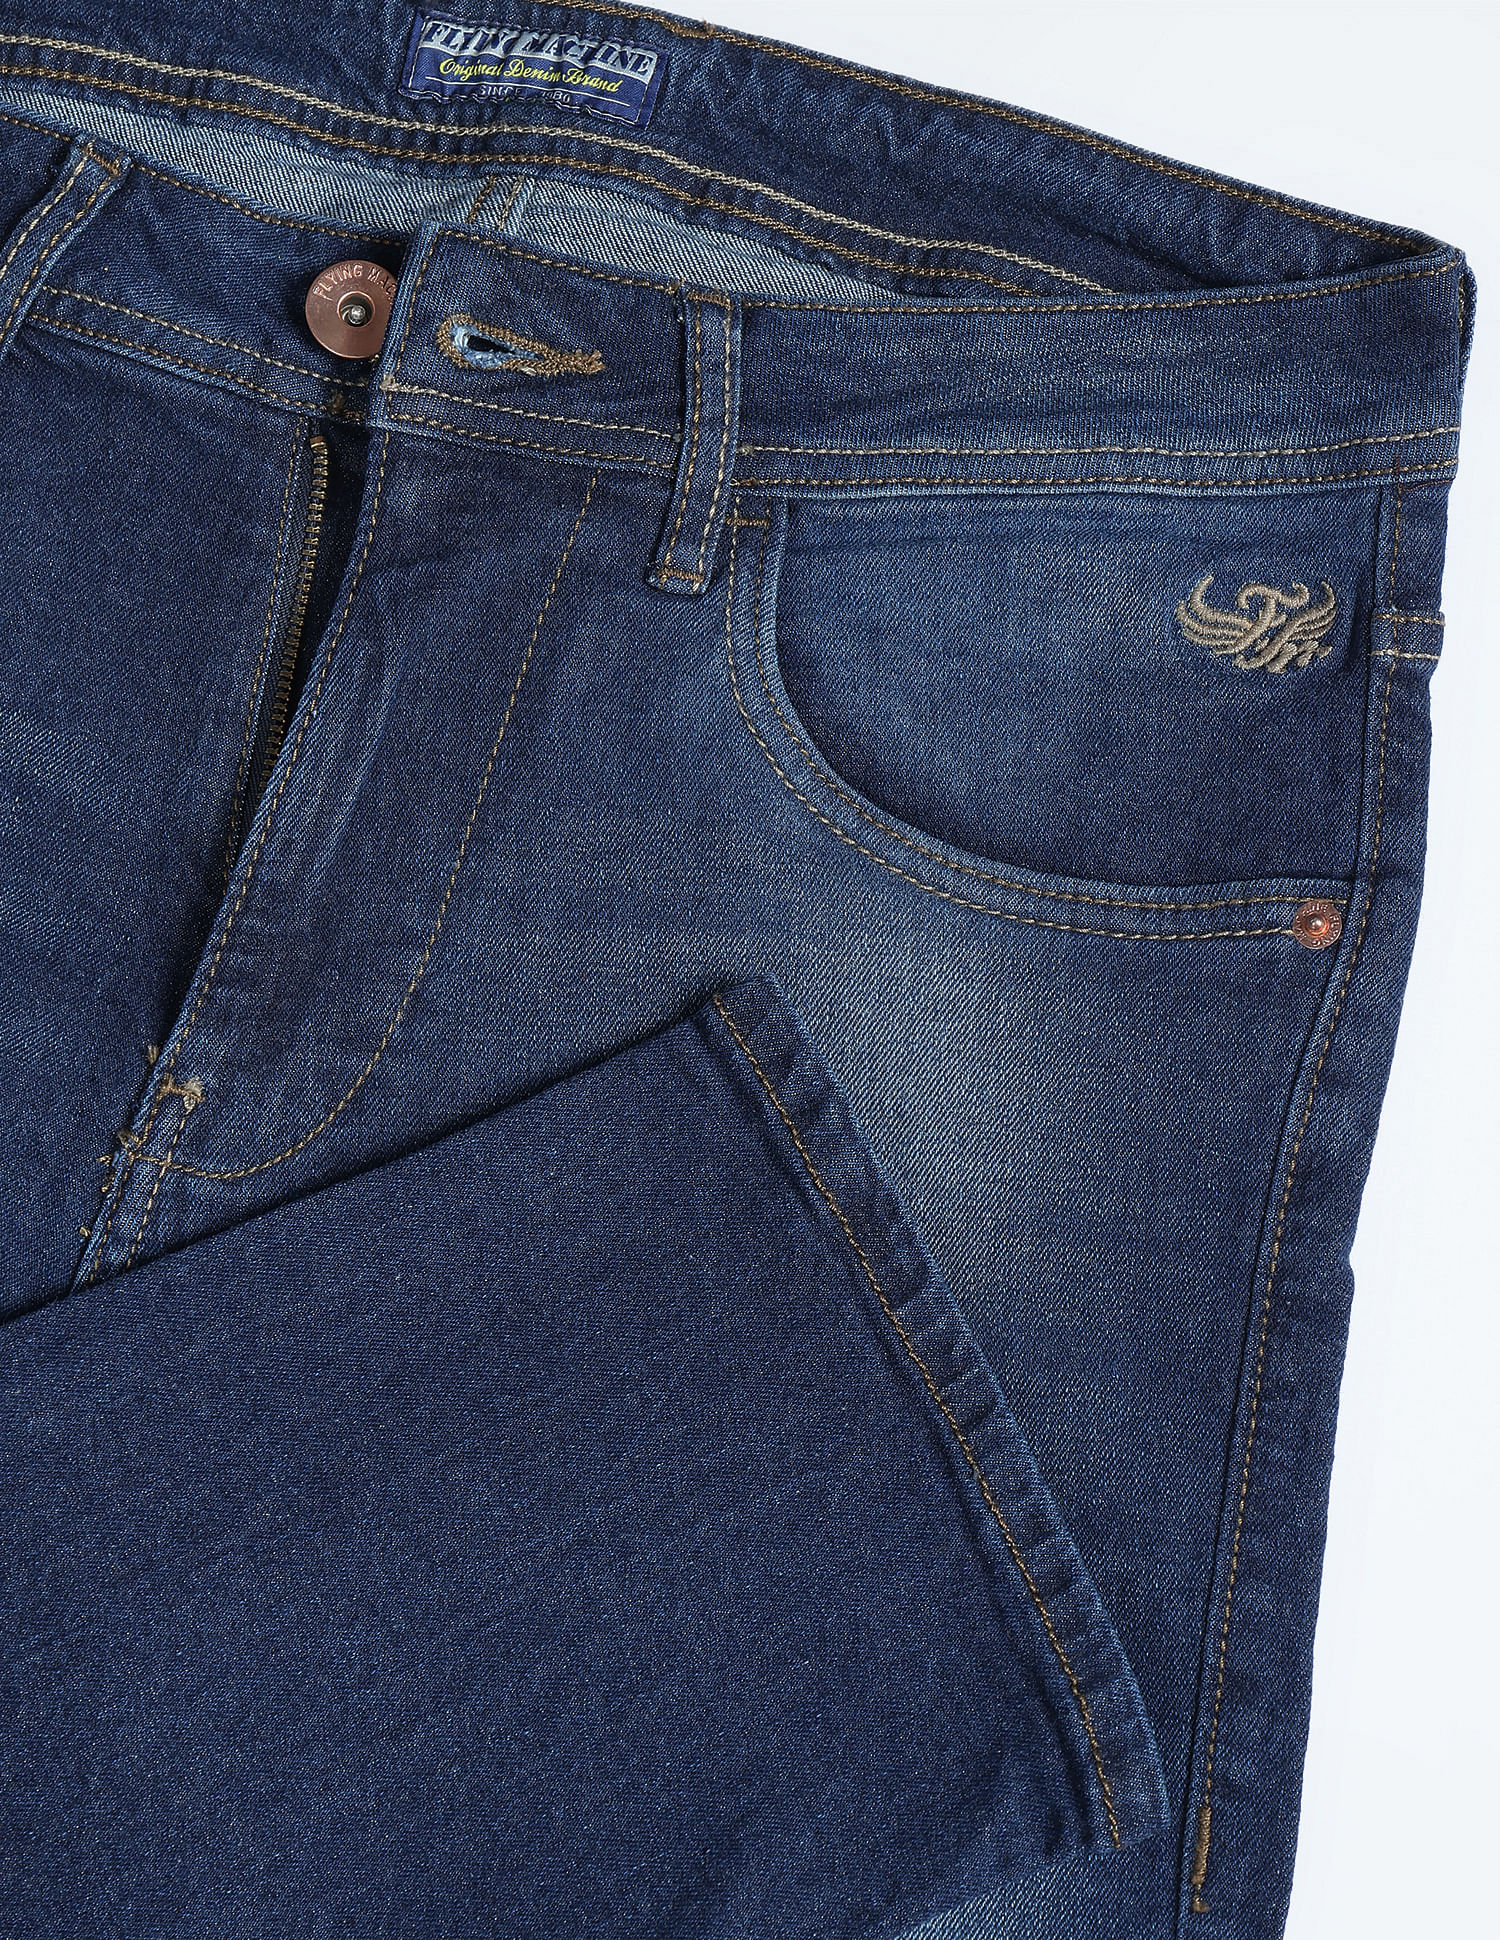 Denim Slim Fit Wrangler Original Jeans at Rs 800/piece in Bhopal | ID:  21554255948